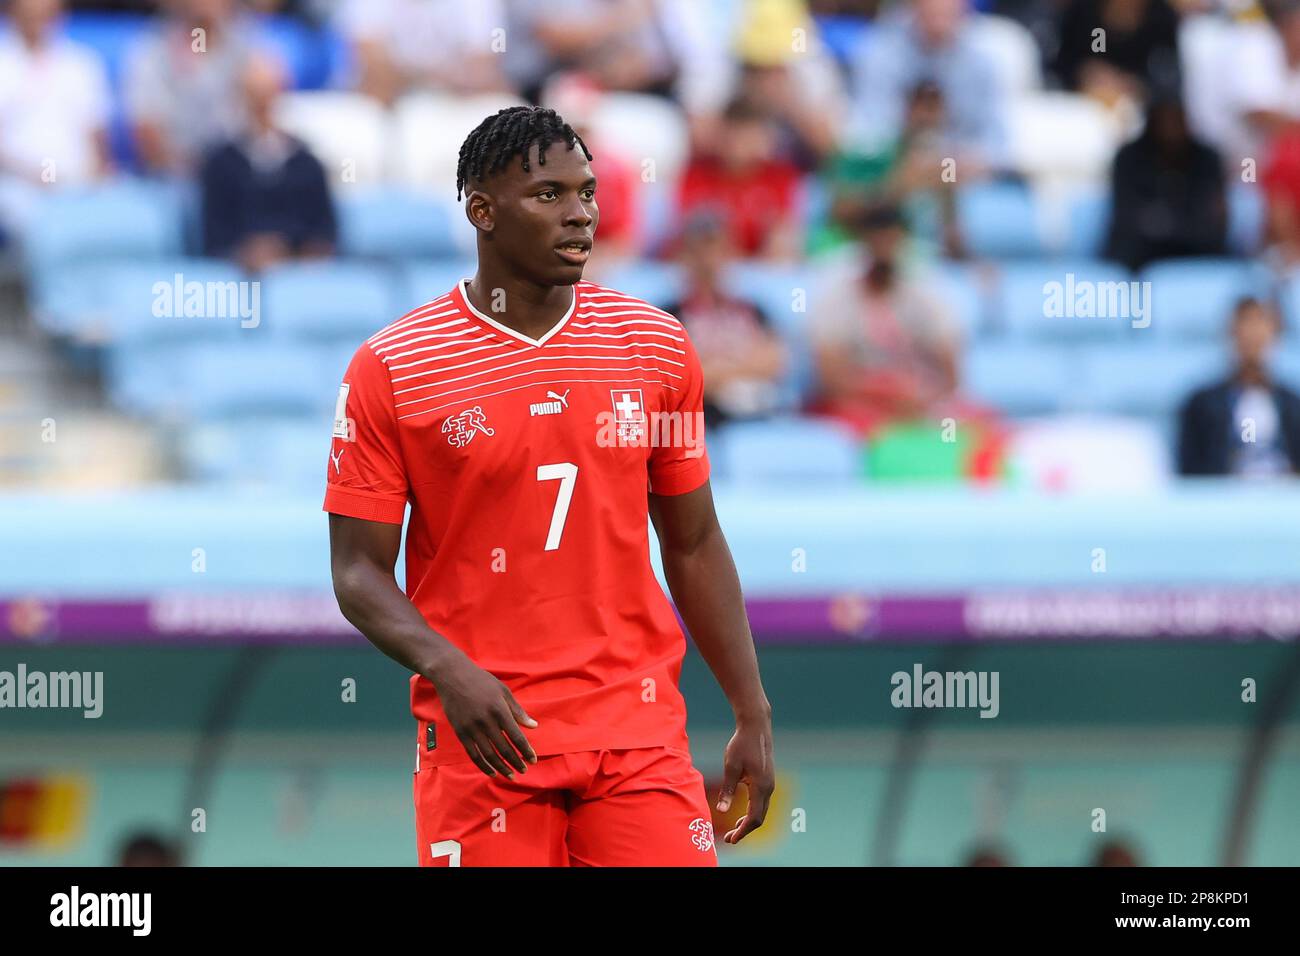 Breel Embolo of Switzerland seen during the FIFA World Cup Qatar 2022 match between Switzerland and Cameroon at Al Janoub Stadium. Final score: Switzerland 1:0 Cameroon. Stock Photo